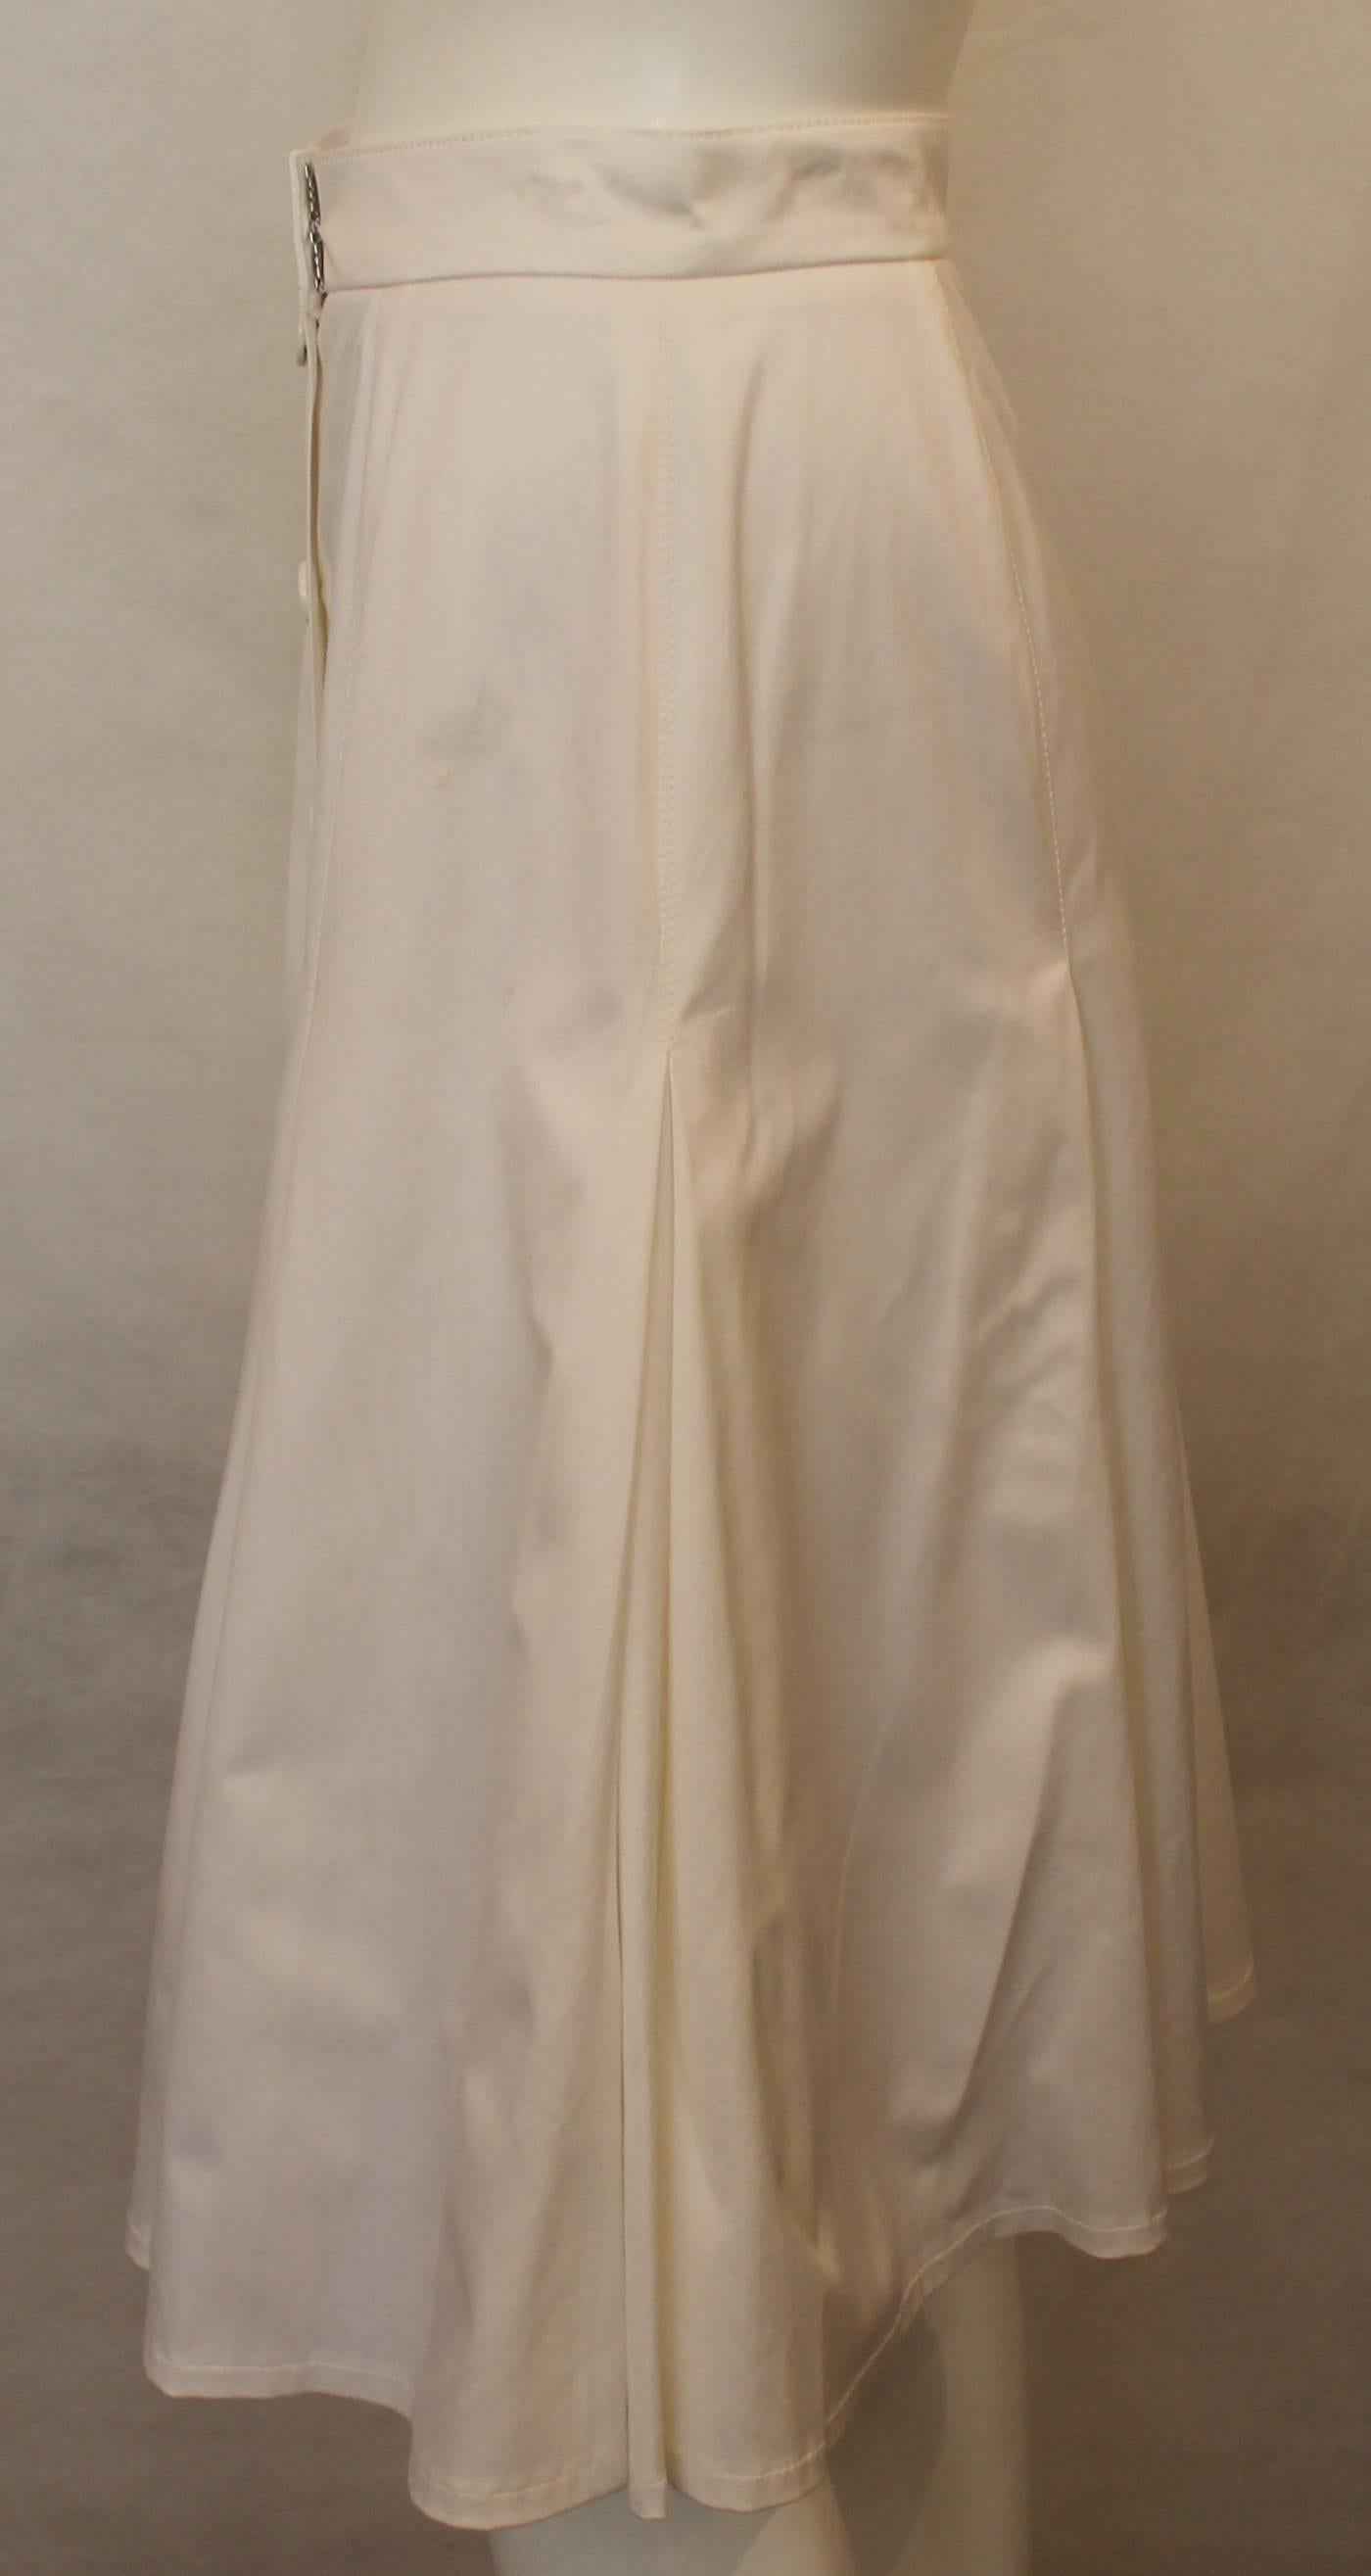 Brown Oscar de la Renta White Cotton Tea Length Skirt with Pleats and Buttons - 6